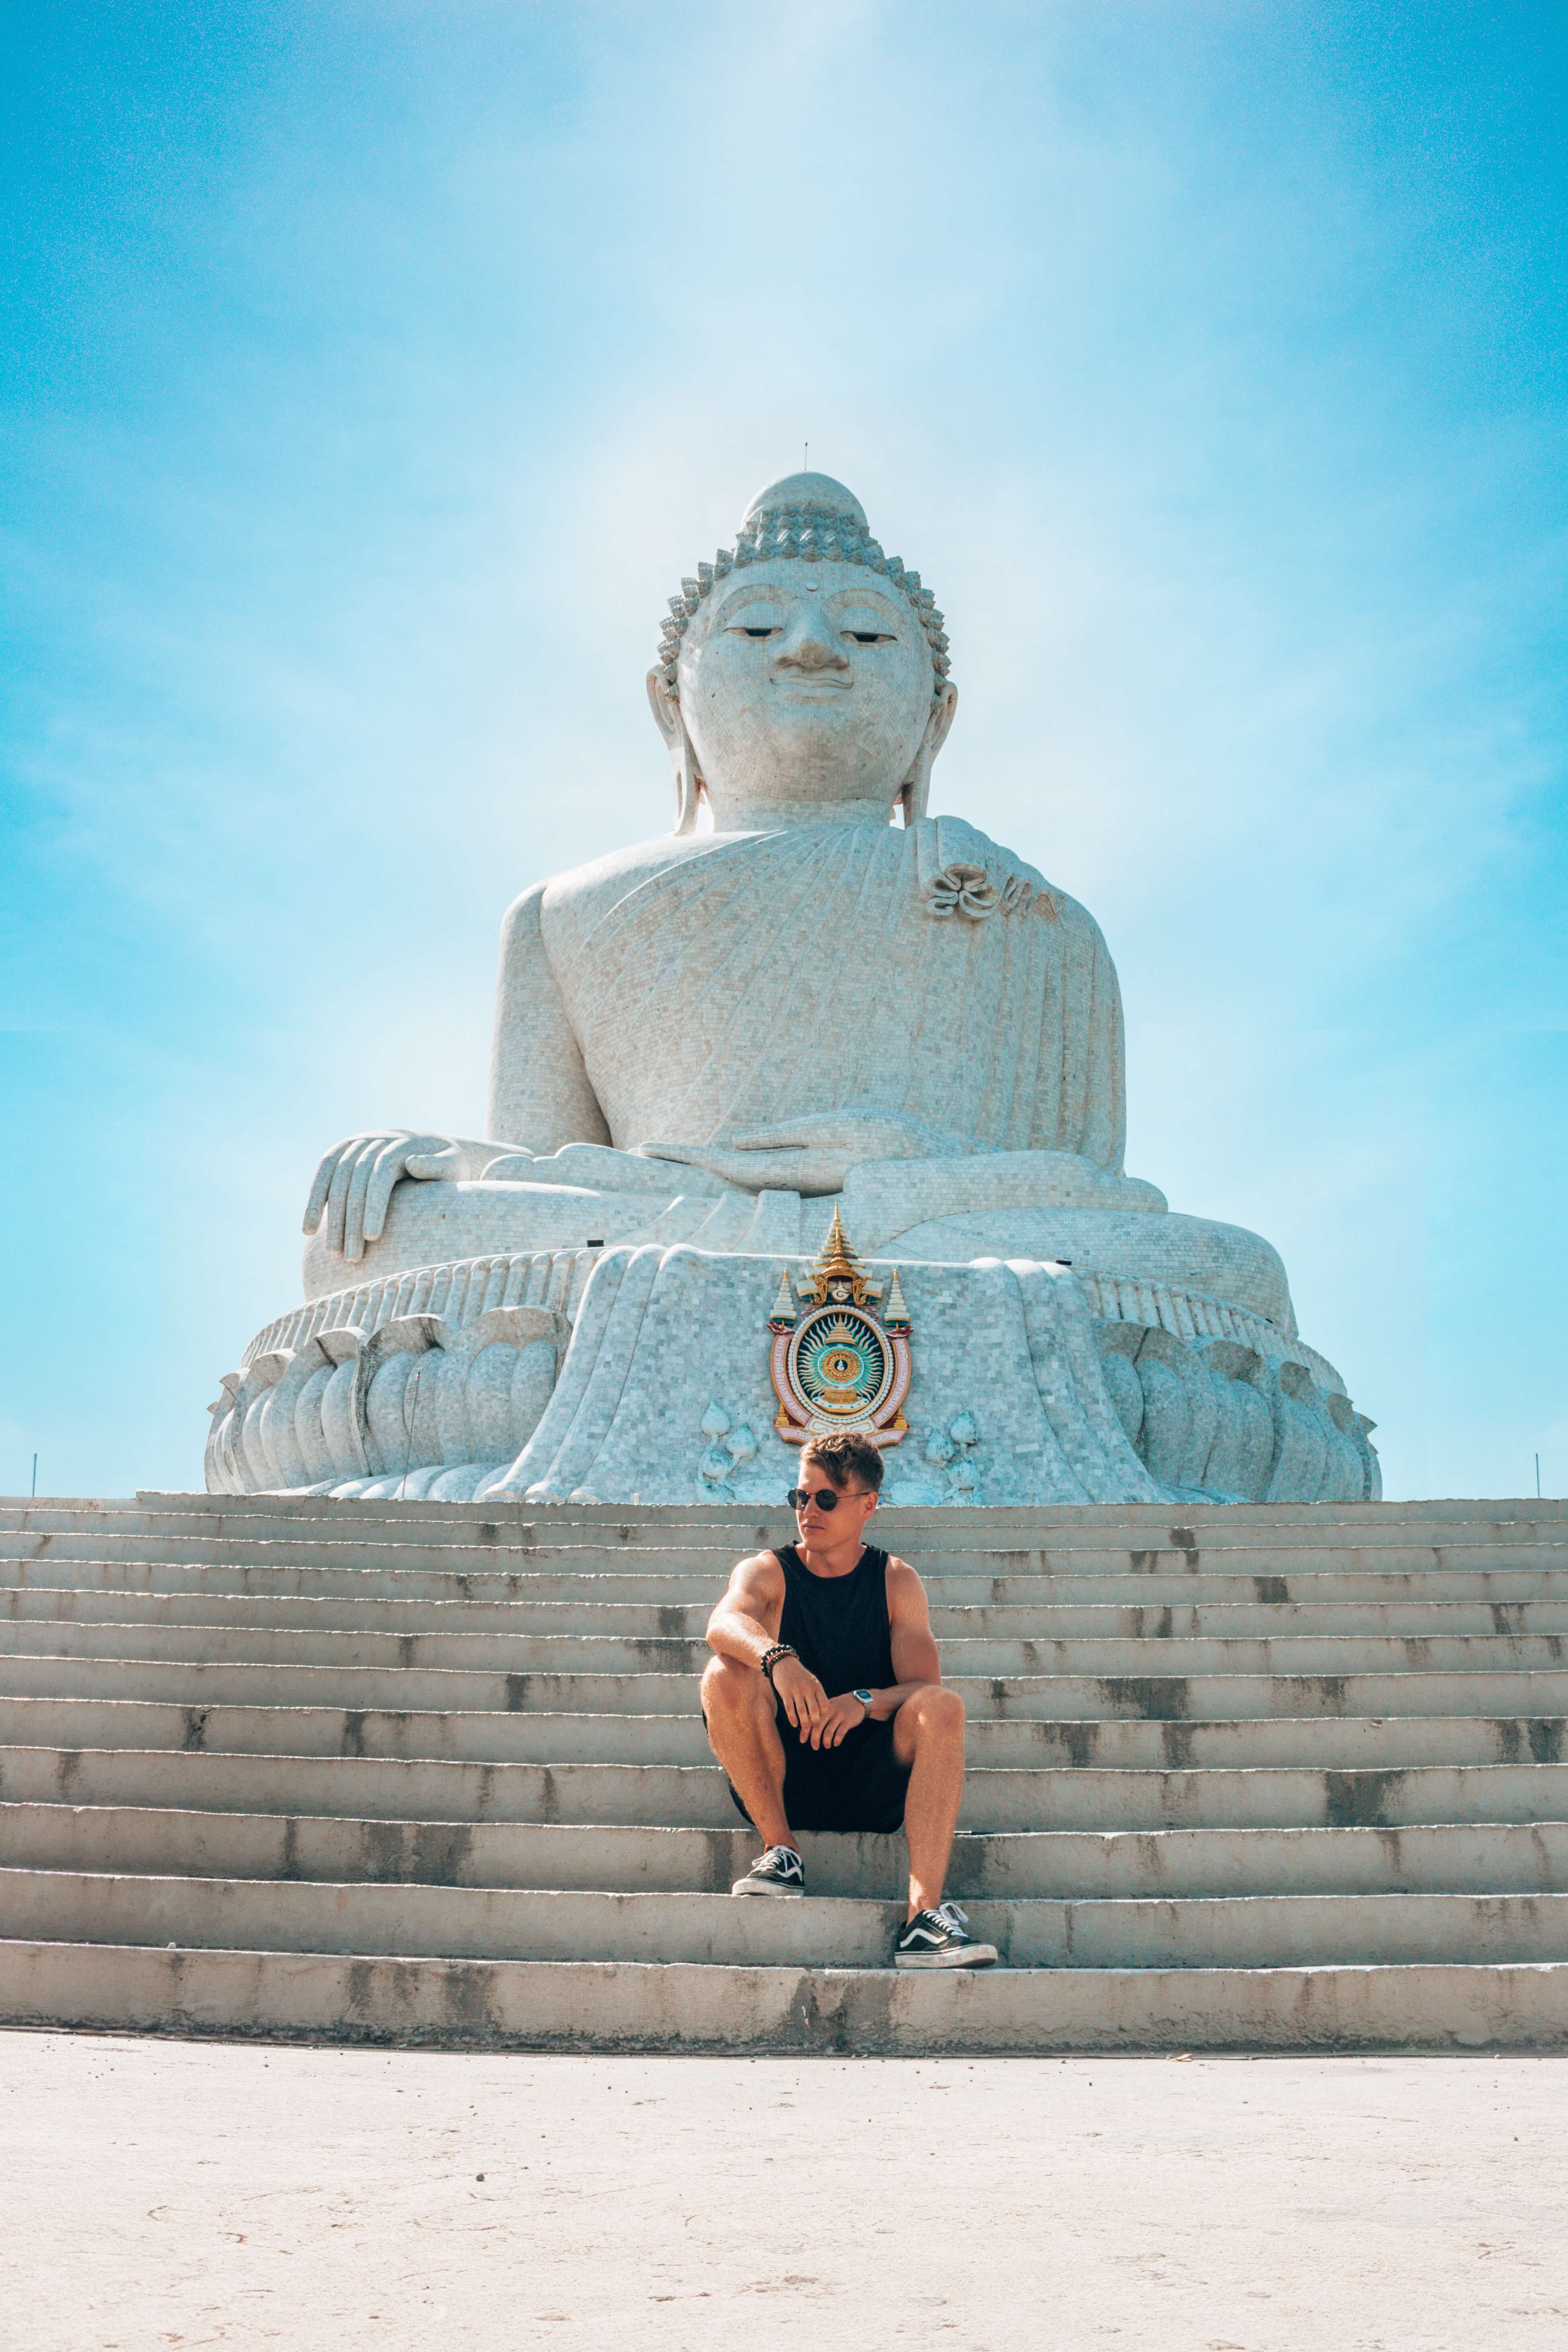 The awesome Big Buddha in Phuket